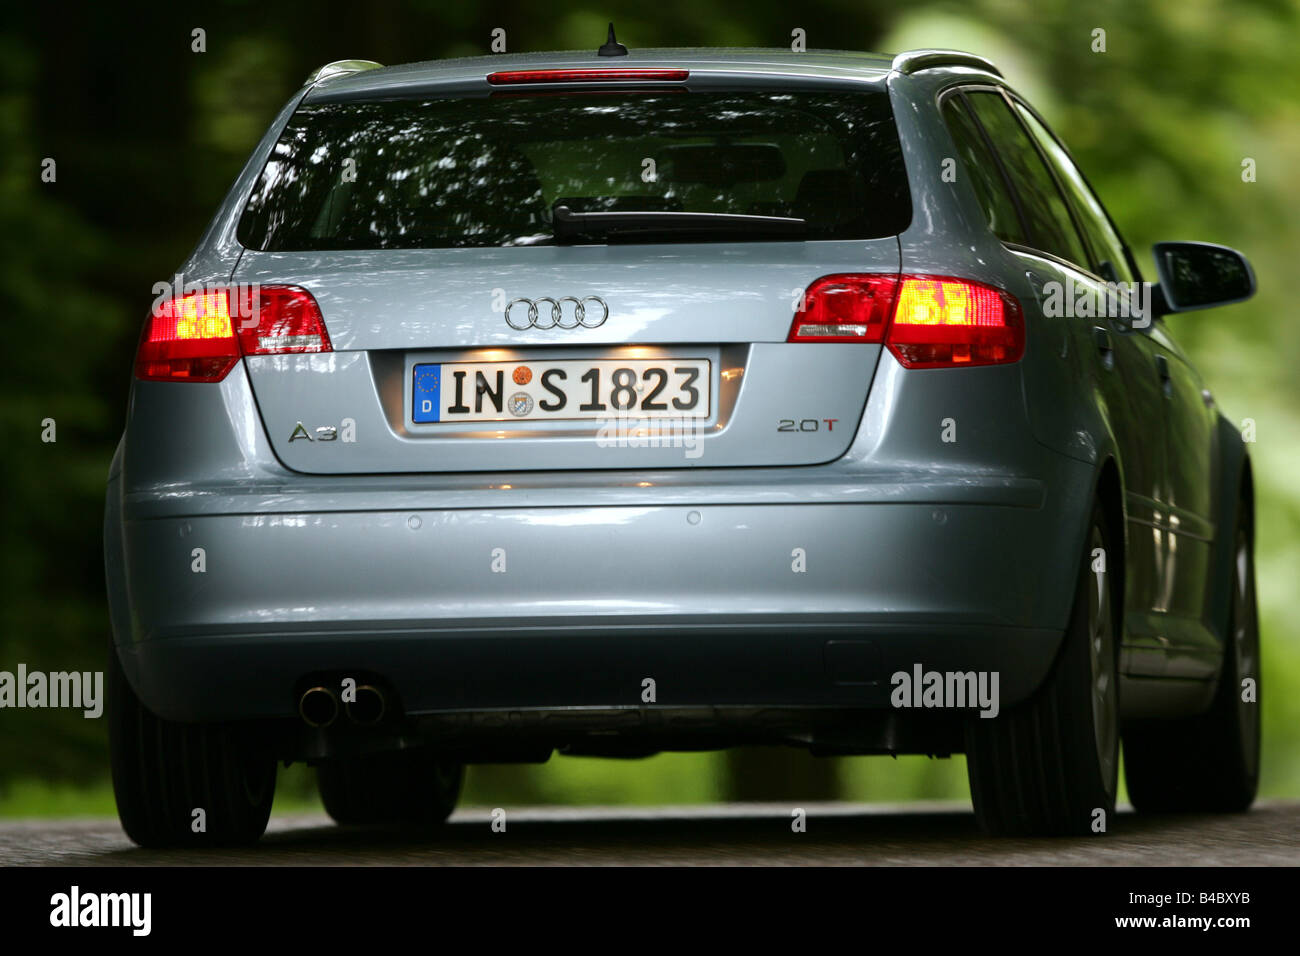 Audi a3 sportback 2 0 tfsi hi-res stock photography and images - Alamy